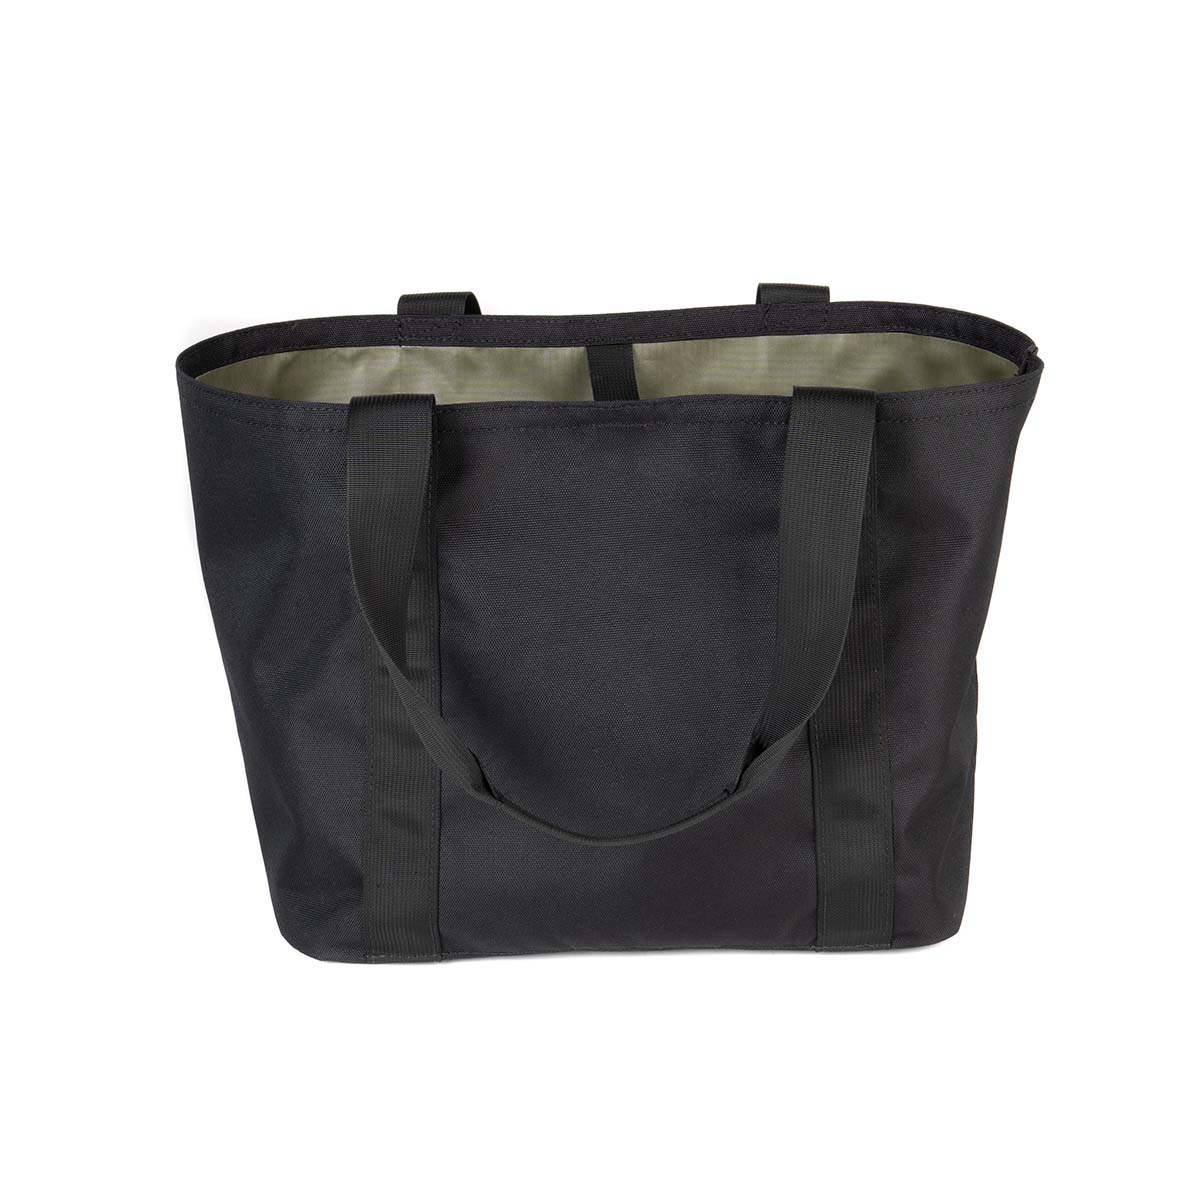 Wholesale Tote Bag Shoulder Bag Canvas Bags with Zipper - China Wholesale  Tote Bag and Shoulder Bag price